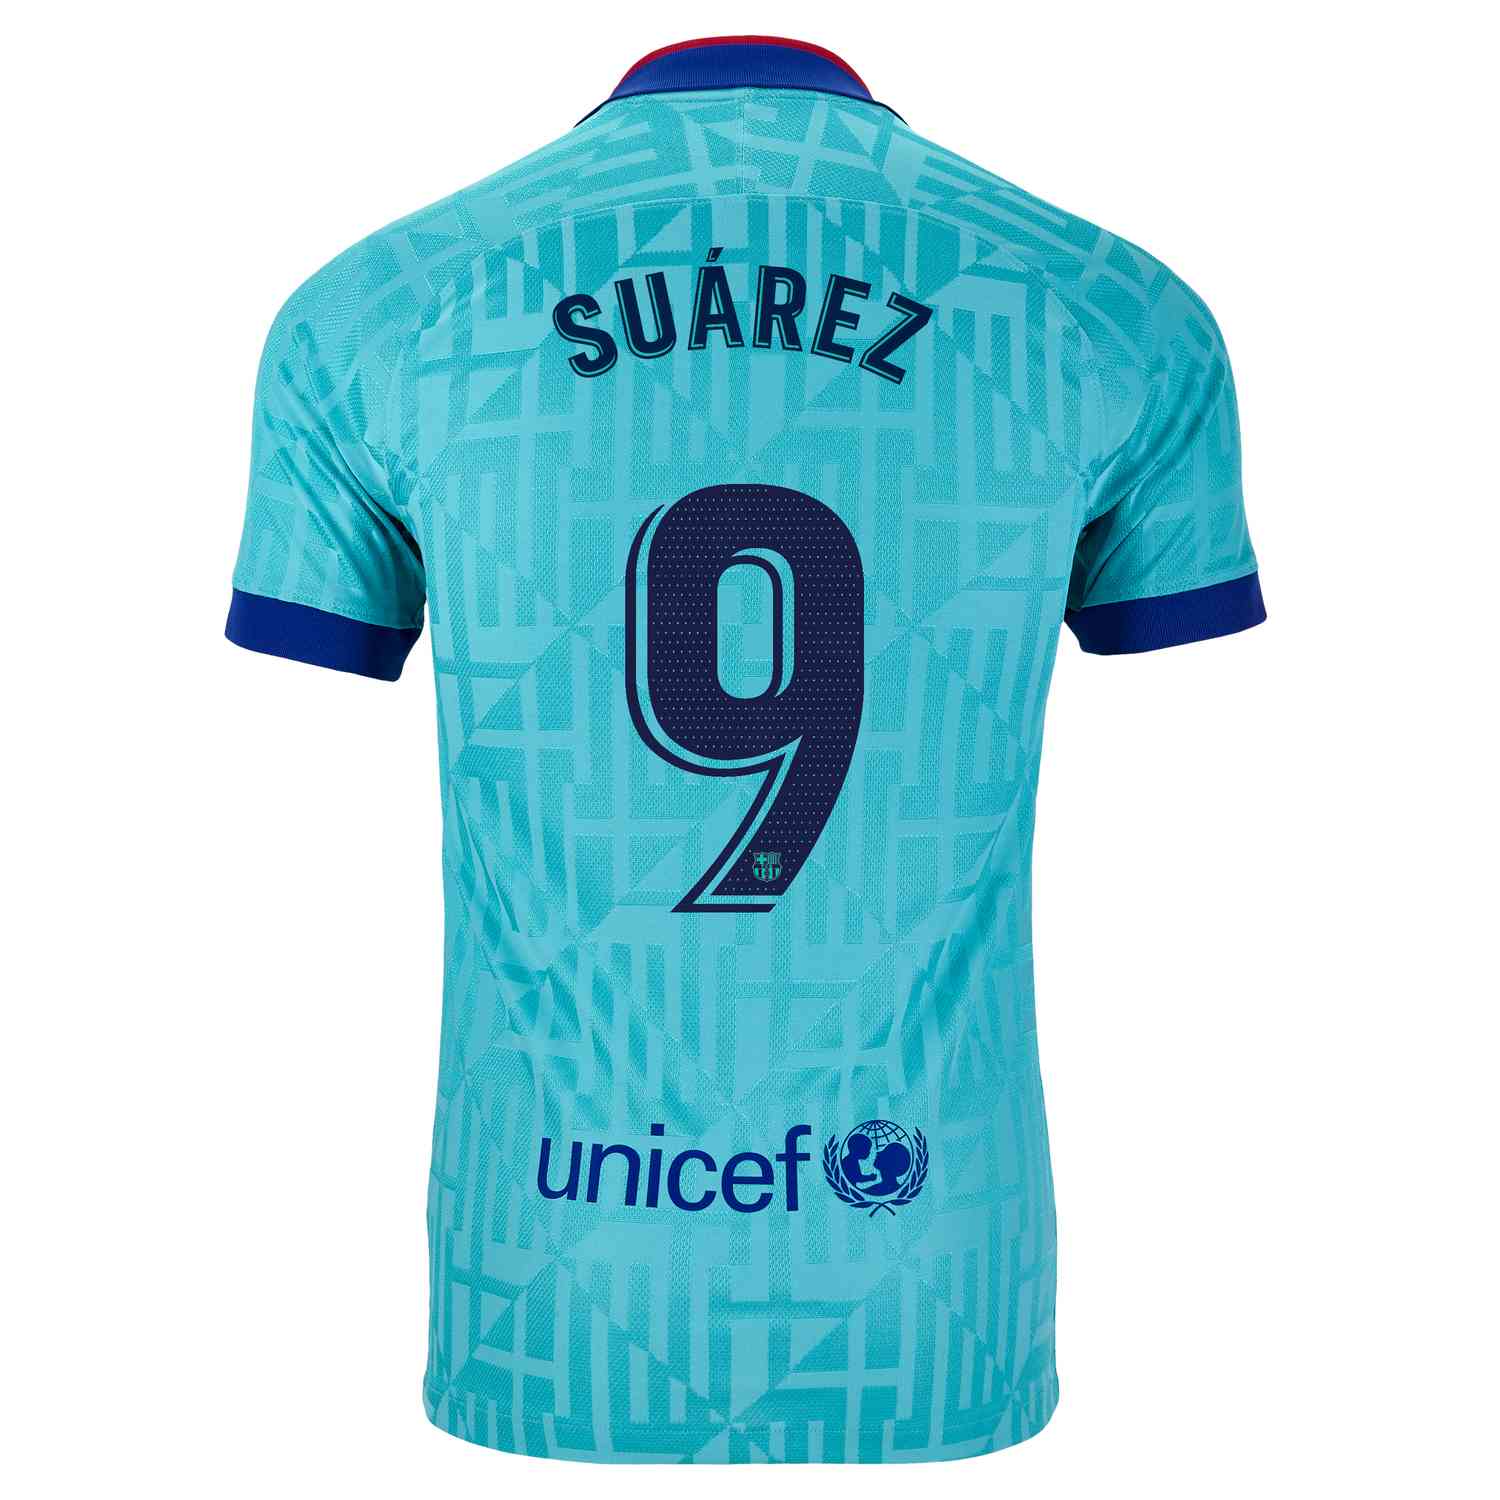 2019/20 Nike Luis Suarez Barcelona 3rd Jersey